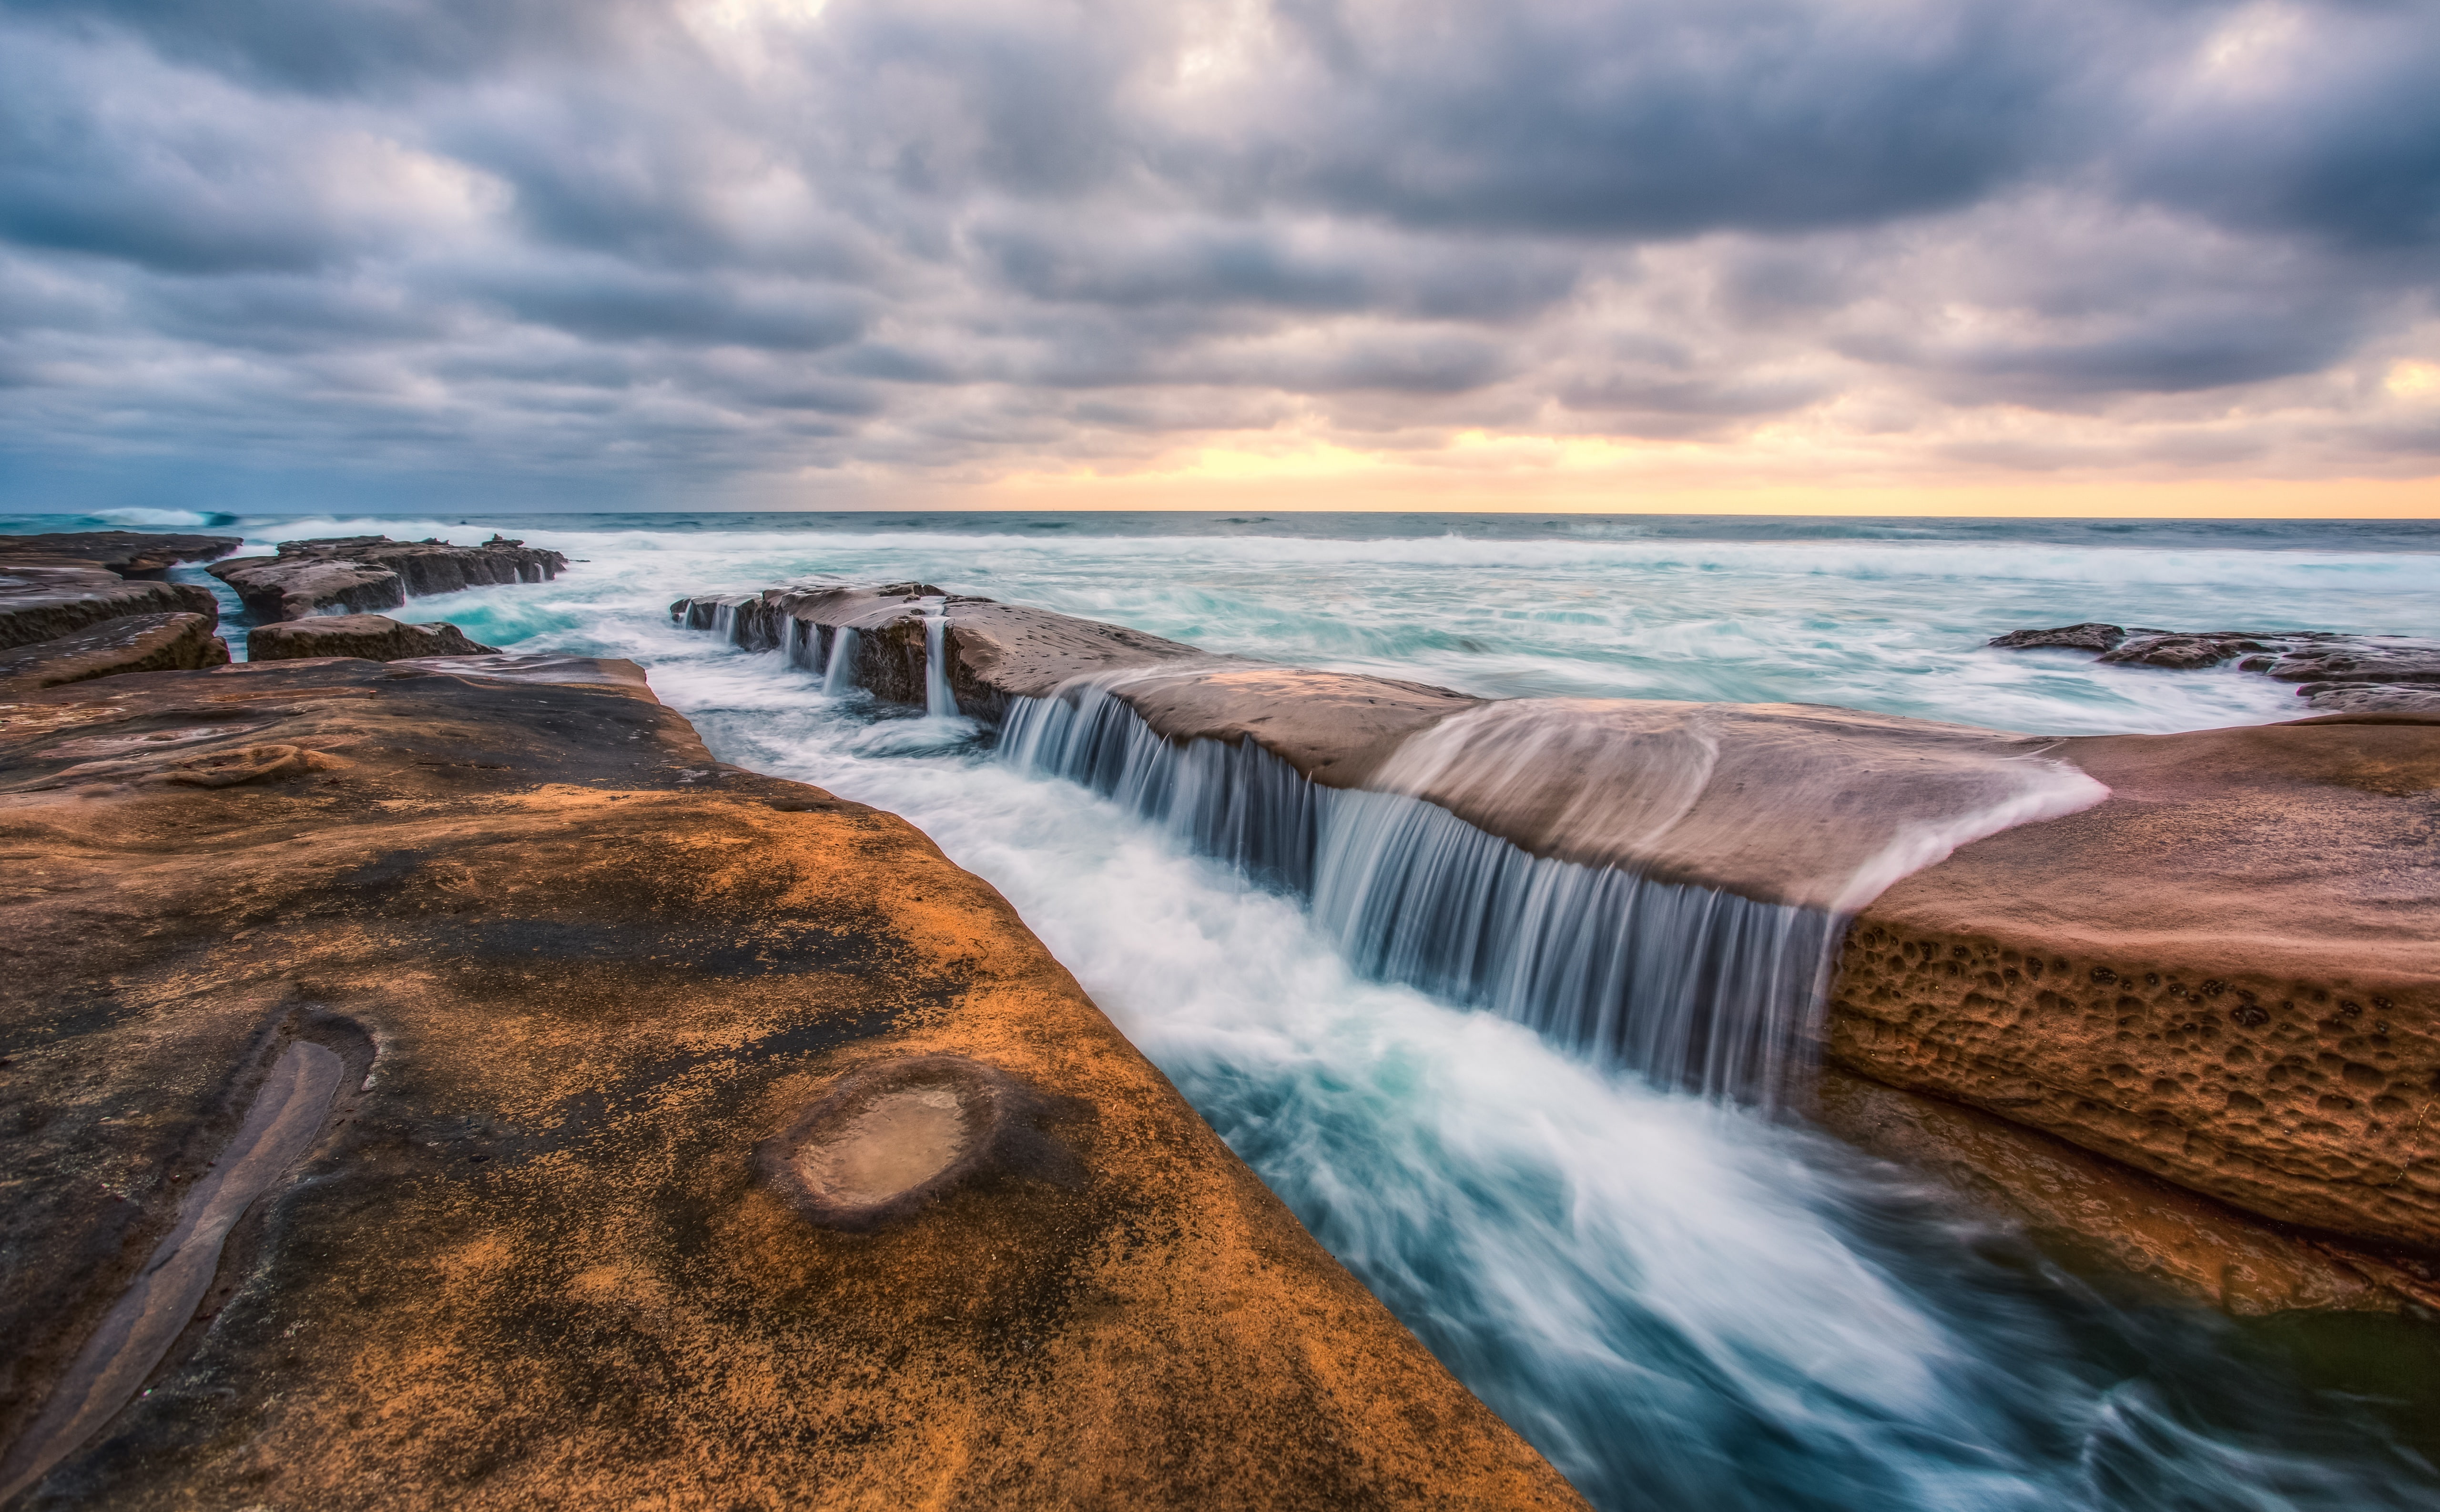 Pacific Ocean Rocks, water falls, United States, California, Beach